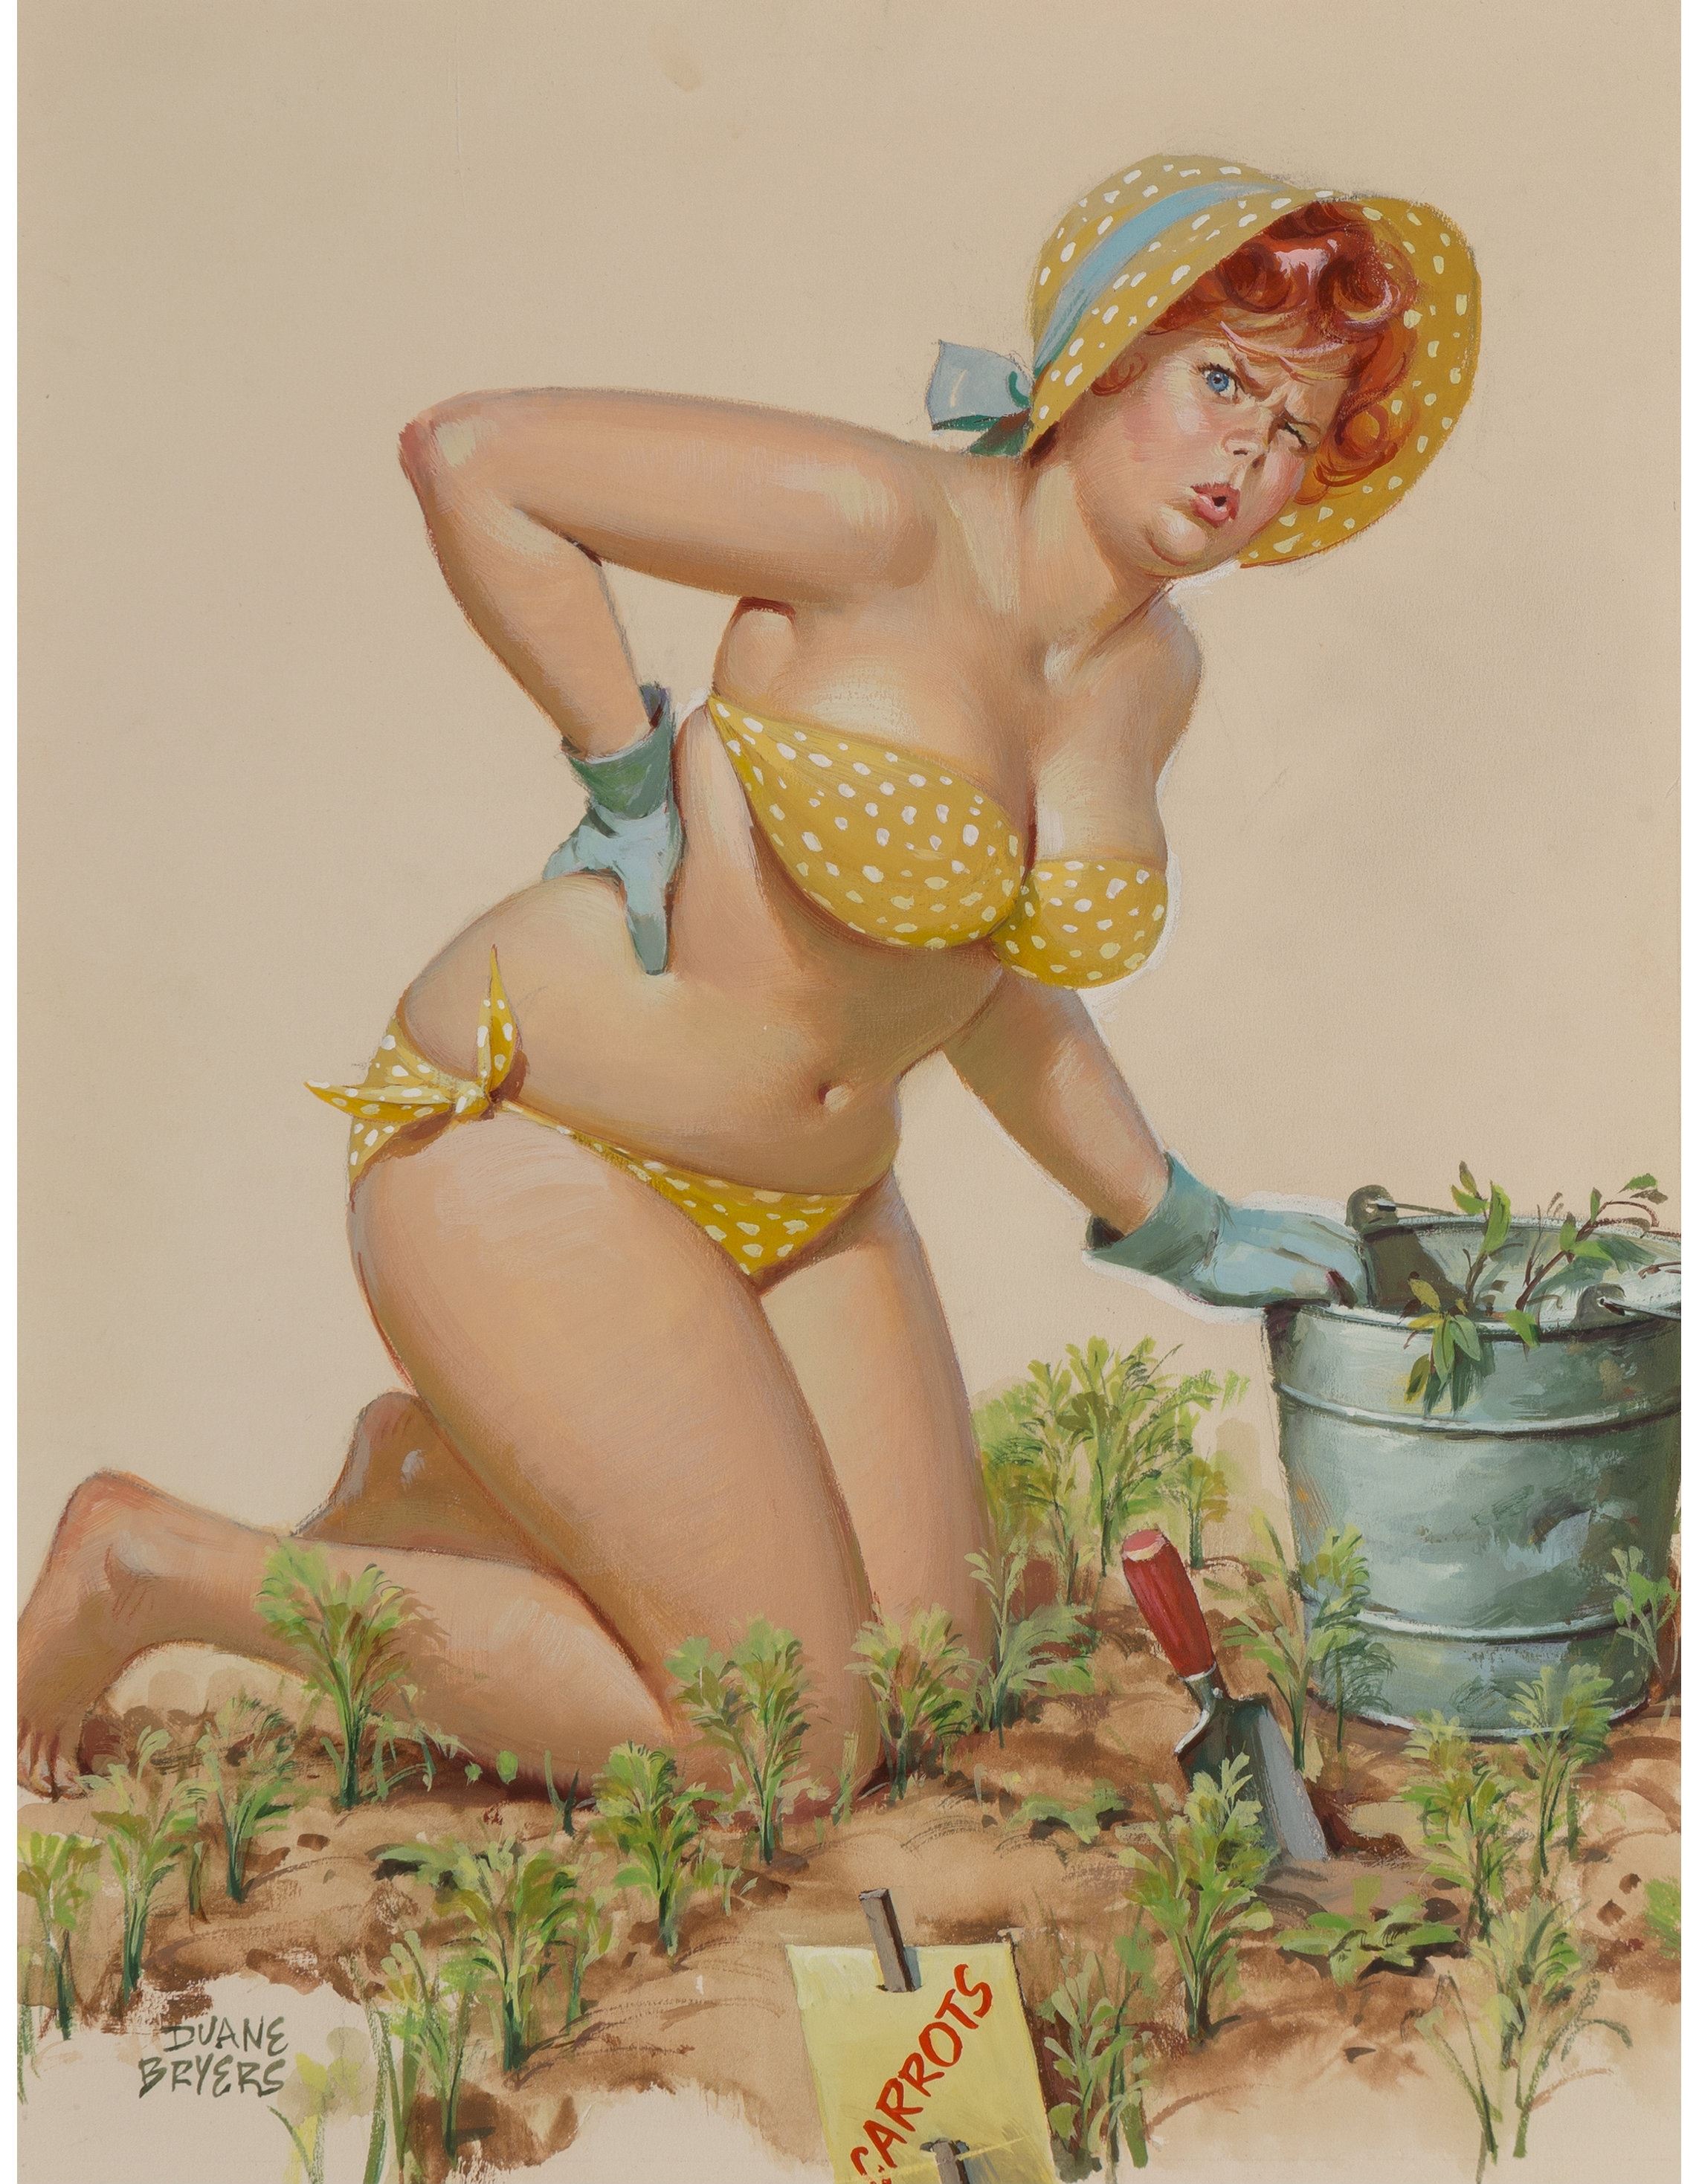 Hilda Weeding the Garden, hardware calendar illustration by Duane Bryers